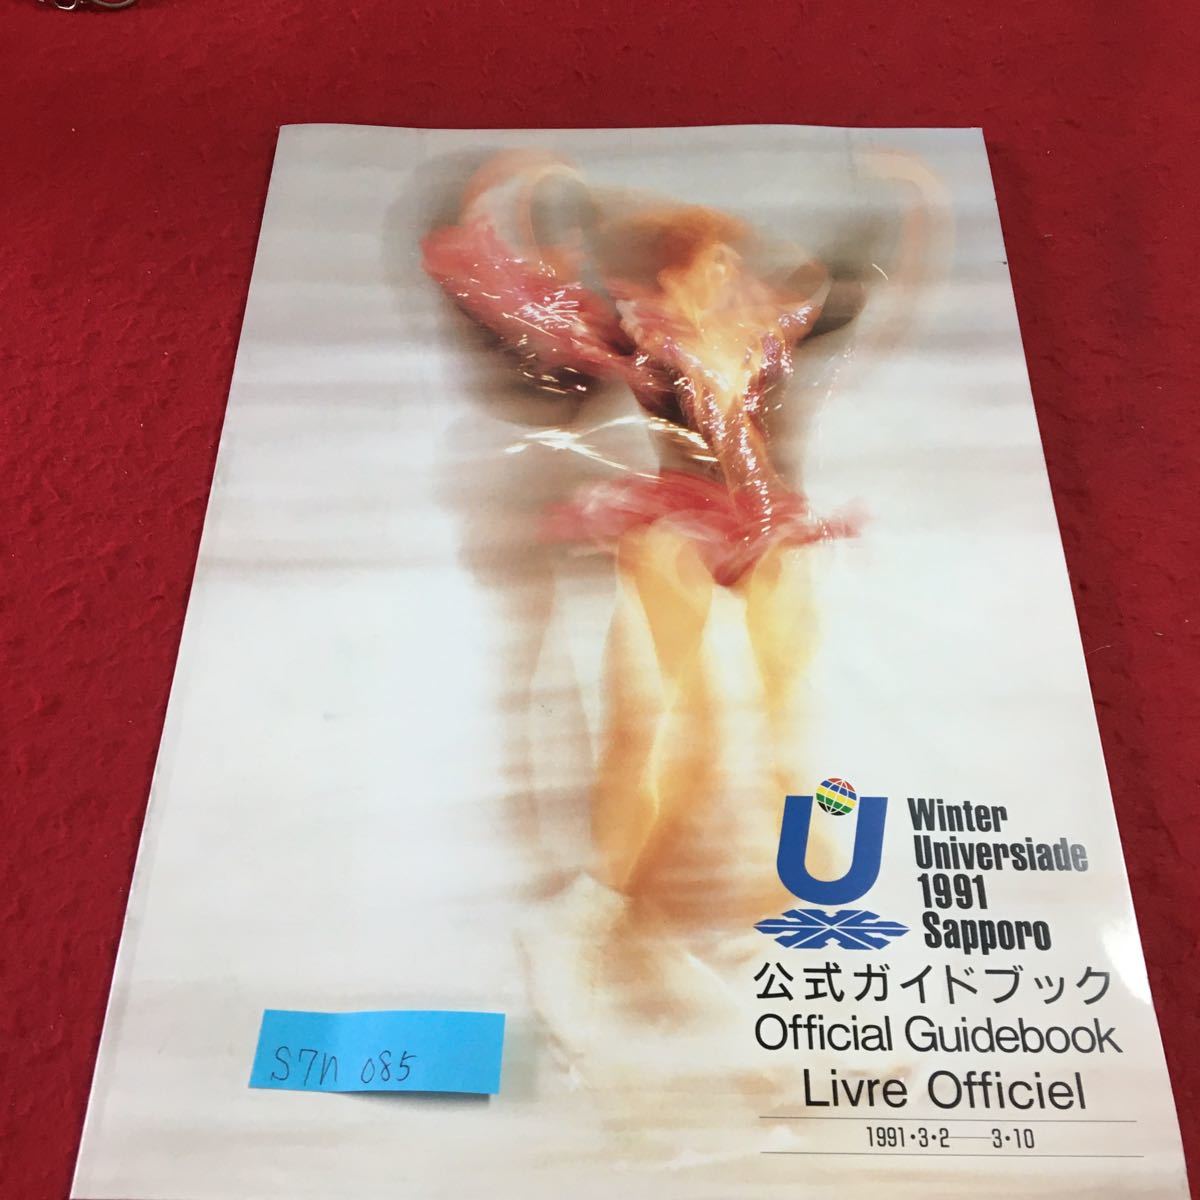 S7h-085 ユニバーシアード冬季競技大会 1991 札幌 公式ガイドブック オフィシャルブック 発行年月日記載なし_画像1